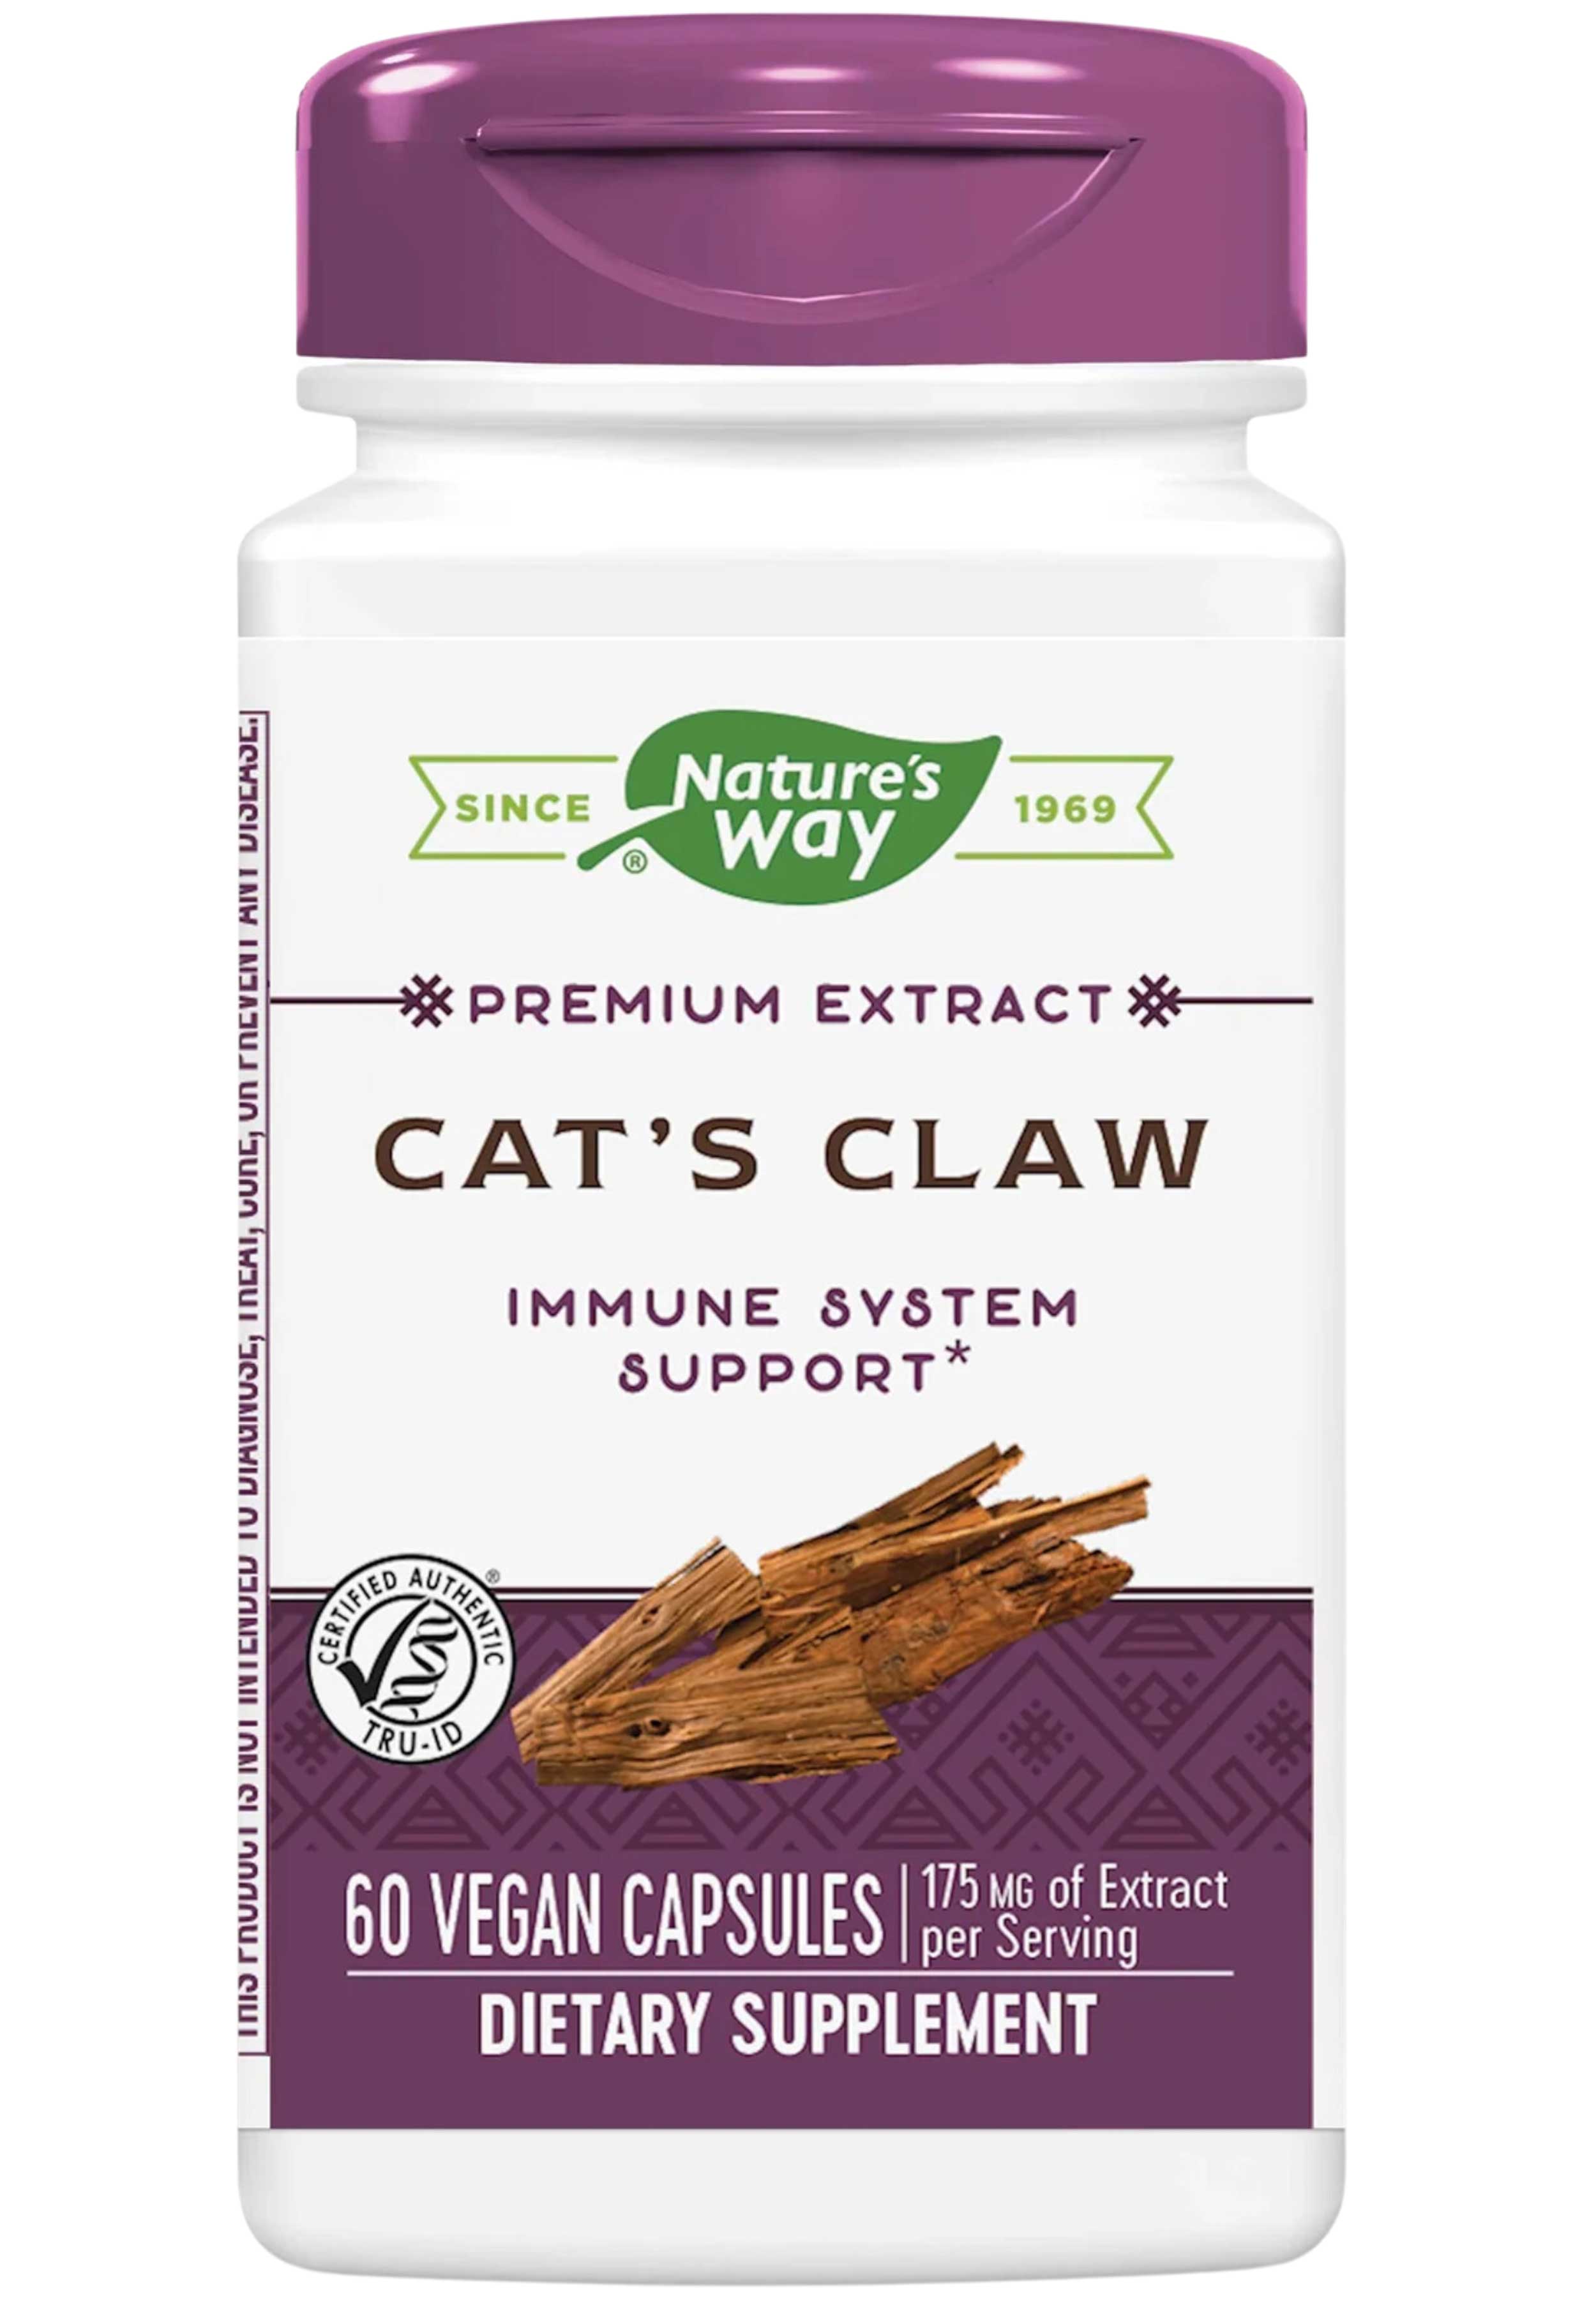 Nature's Way Cat's Claw Premium Extract